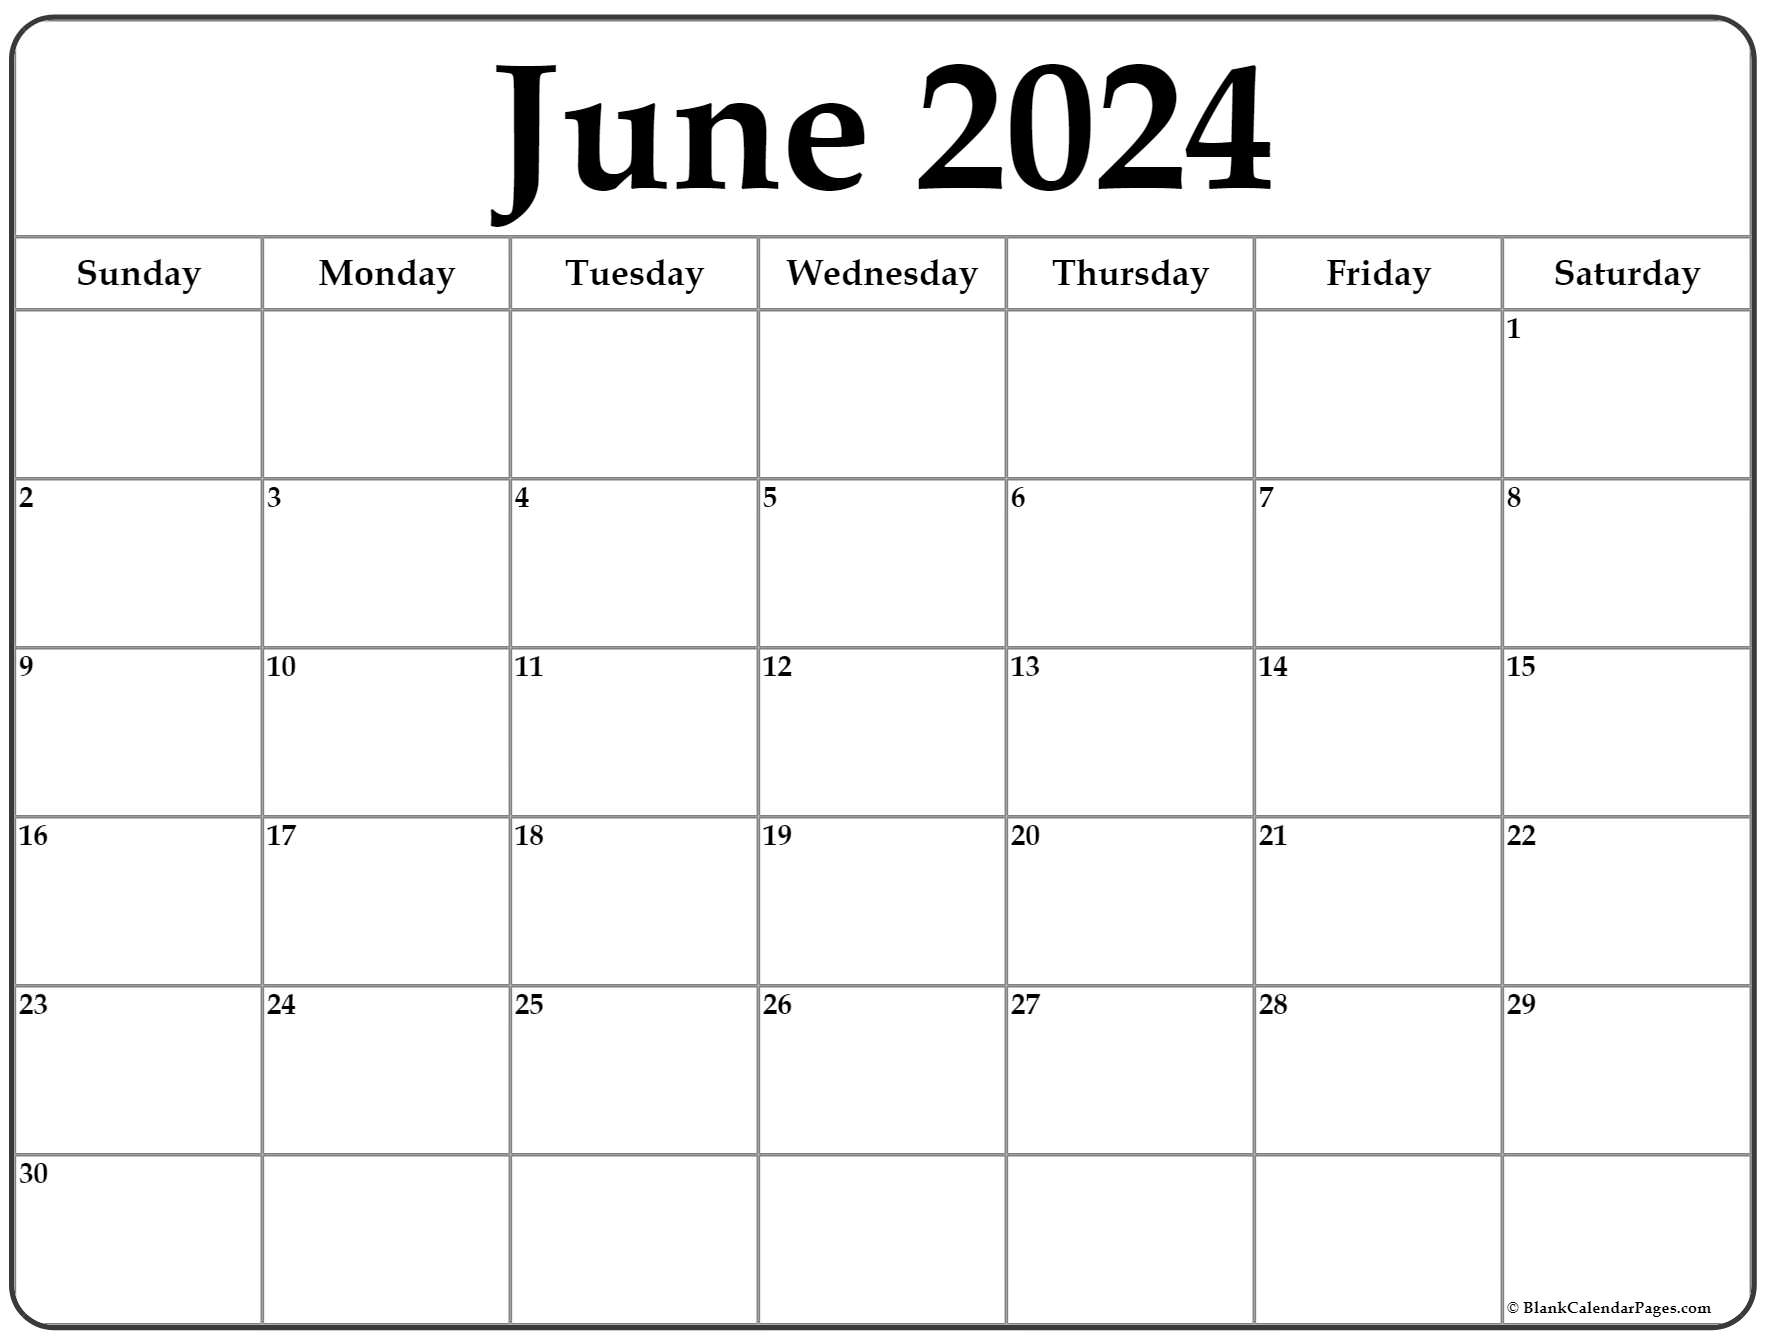 Month Of June Calendar 2022 June 2022 Calendar | Free Printable Calendar Templates